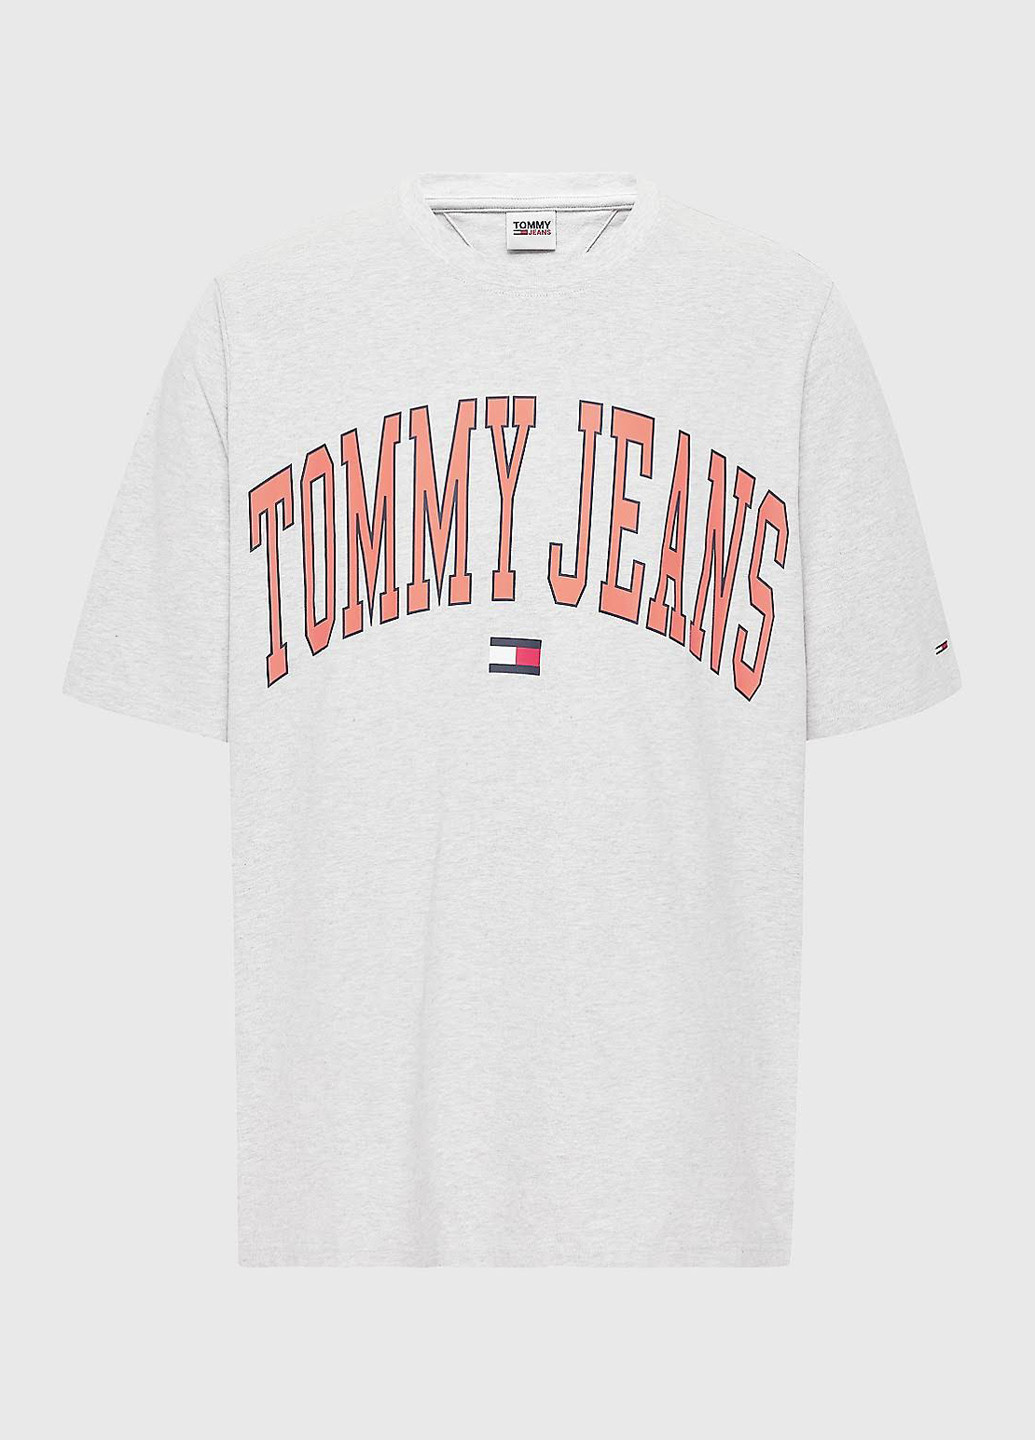 Серая футболка Tommy Hilfiger